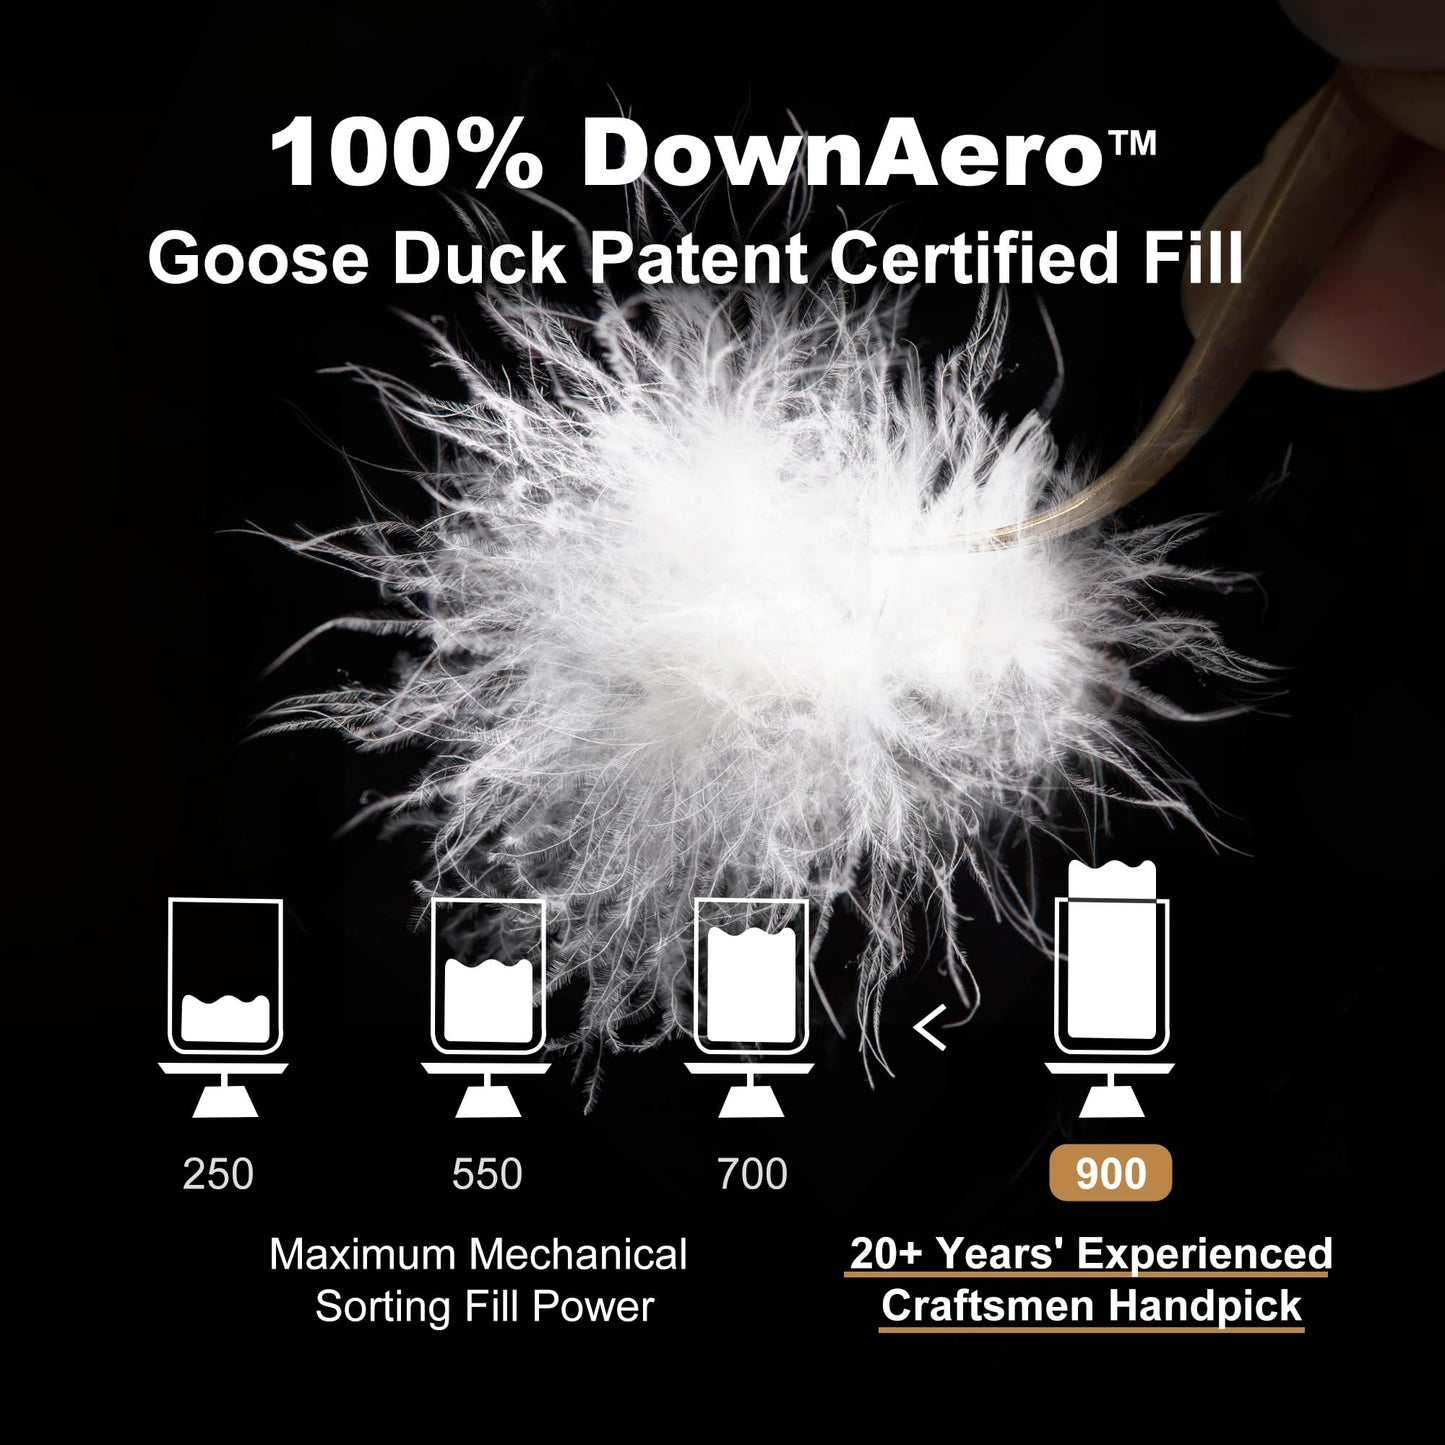 DownAero™ Goose Down Comforter Queen Size 100% Egyptian Sateen Cotton, 900 Fill Power Medium Warmth for All Season Duvet Insert, White